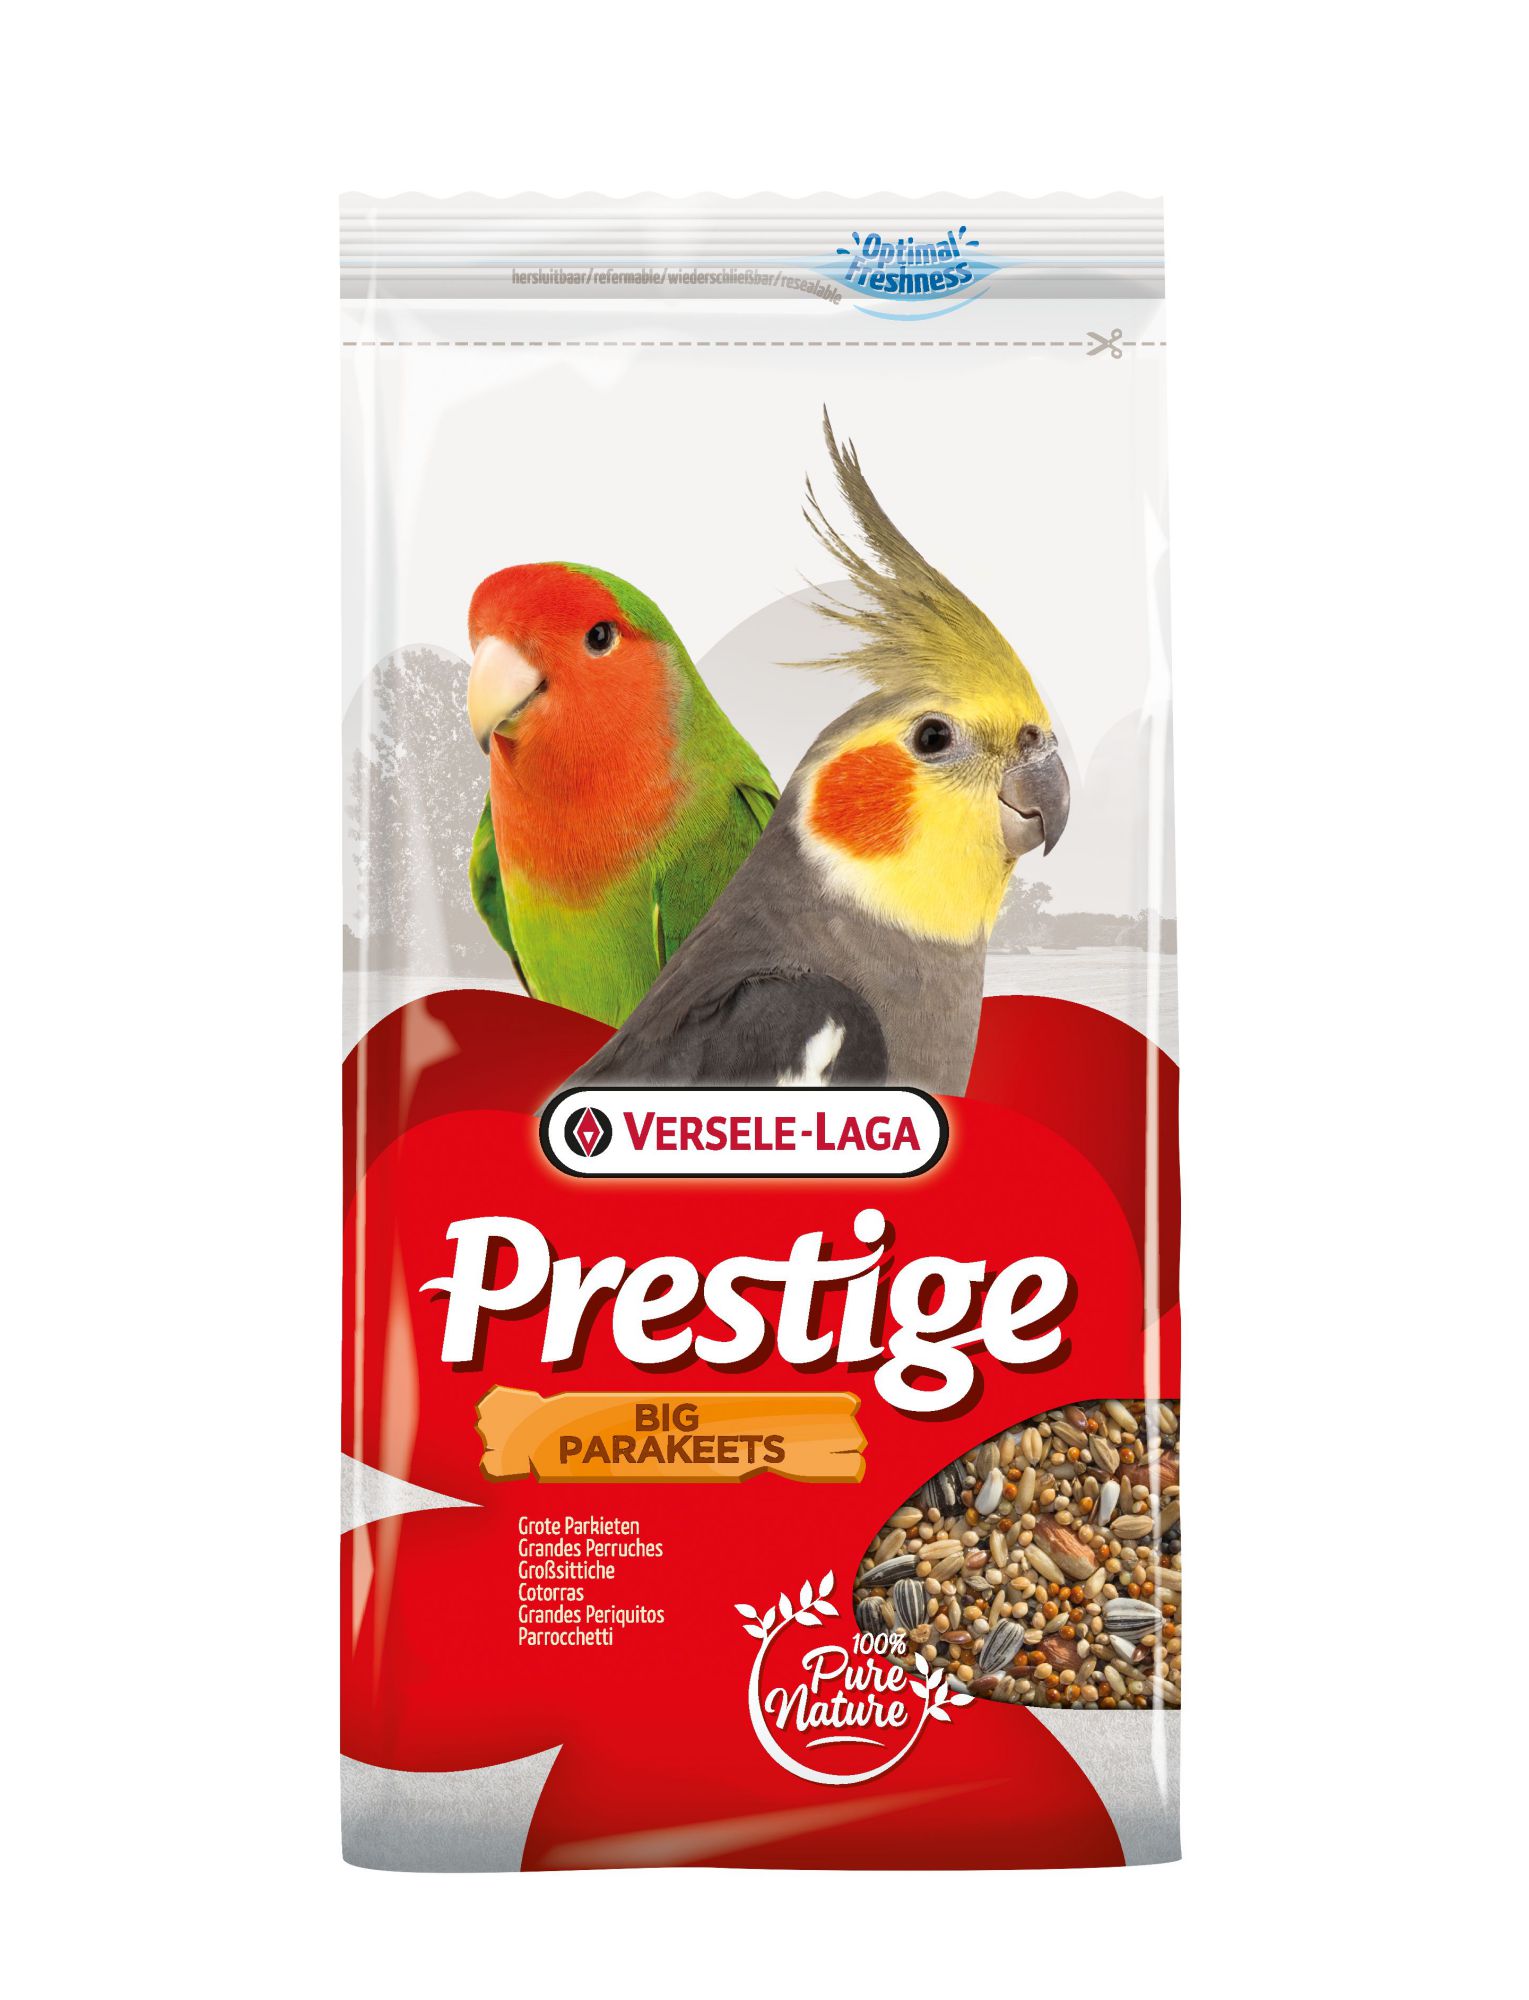 Prestige Big Parakeets High quality seeds mixture 1kg